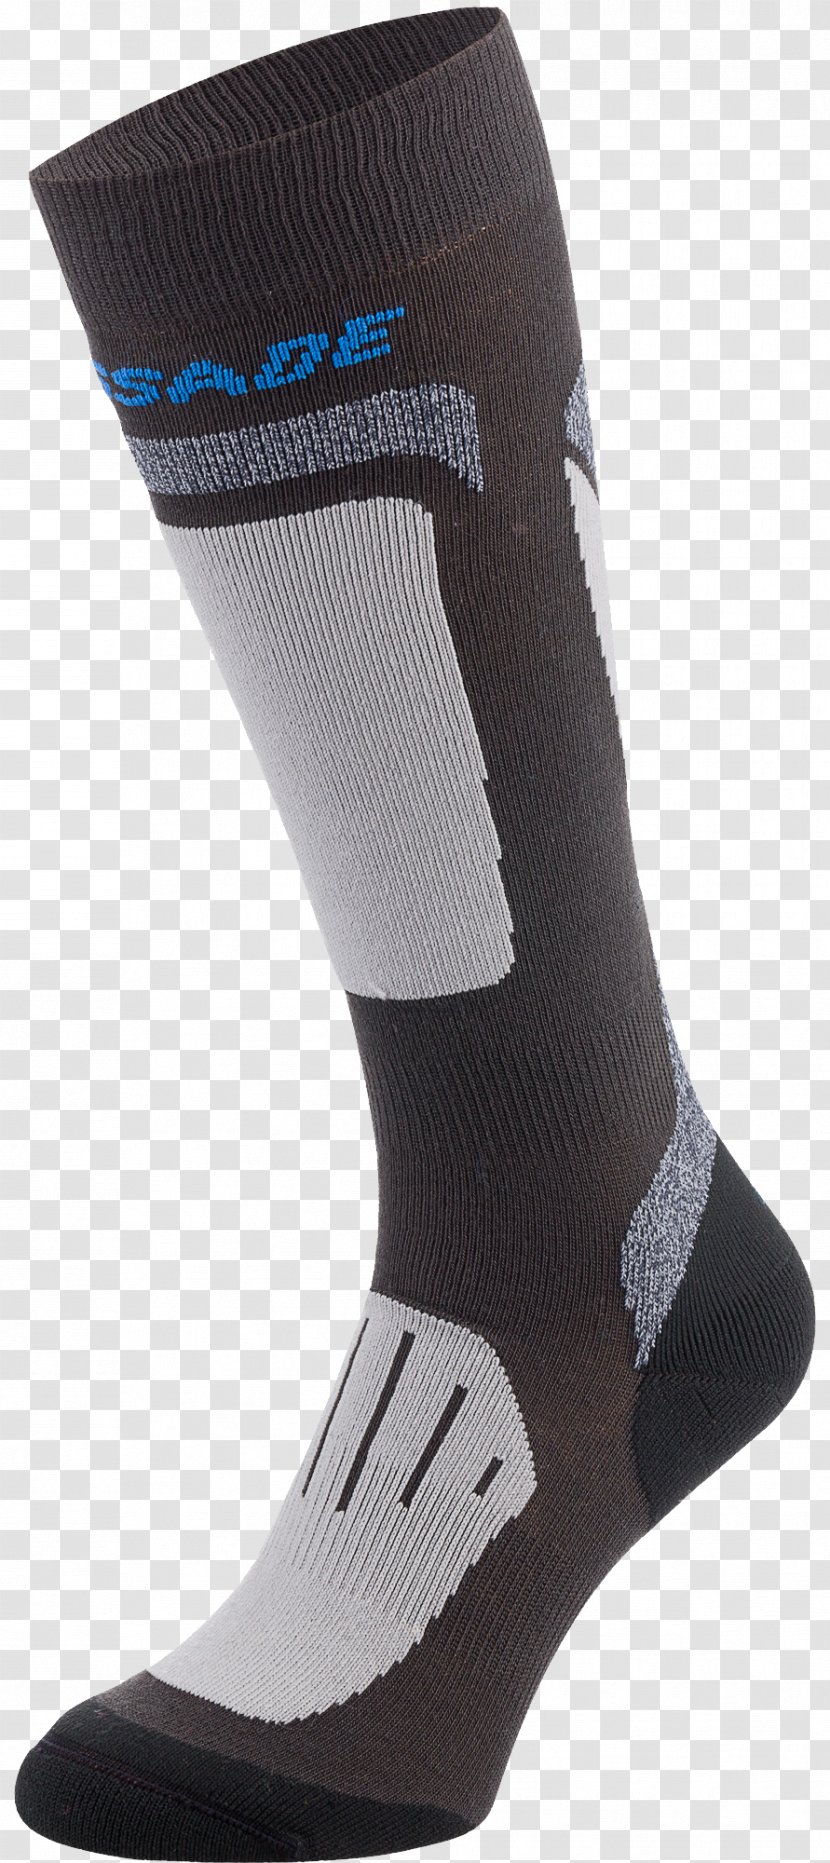 Sock Hosiery - Product - Socks Image Transparent PNG